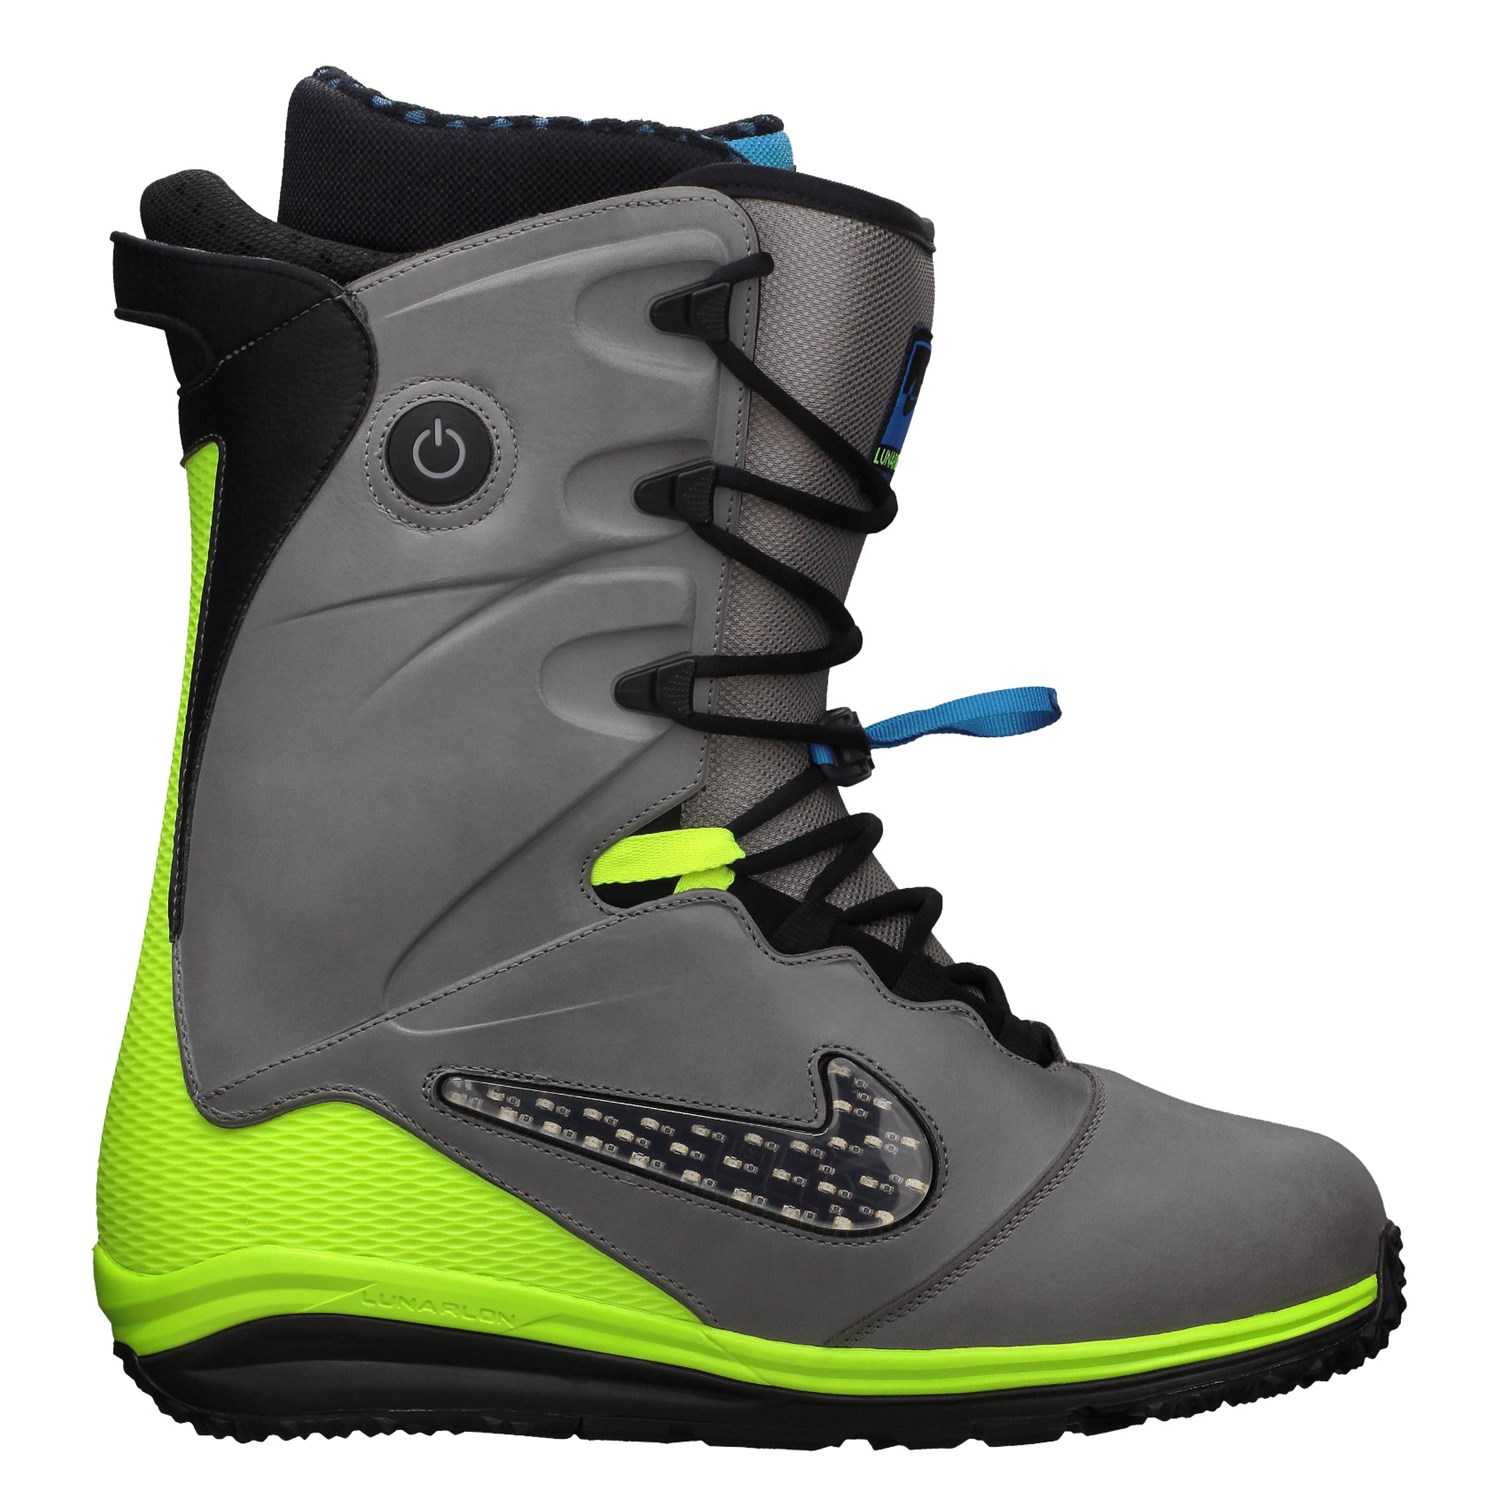 Nike Lunarendor QS Snowboard Boots 2014 | evo